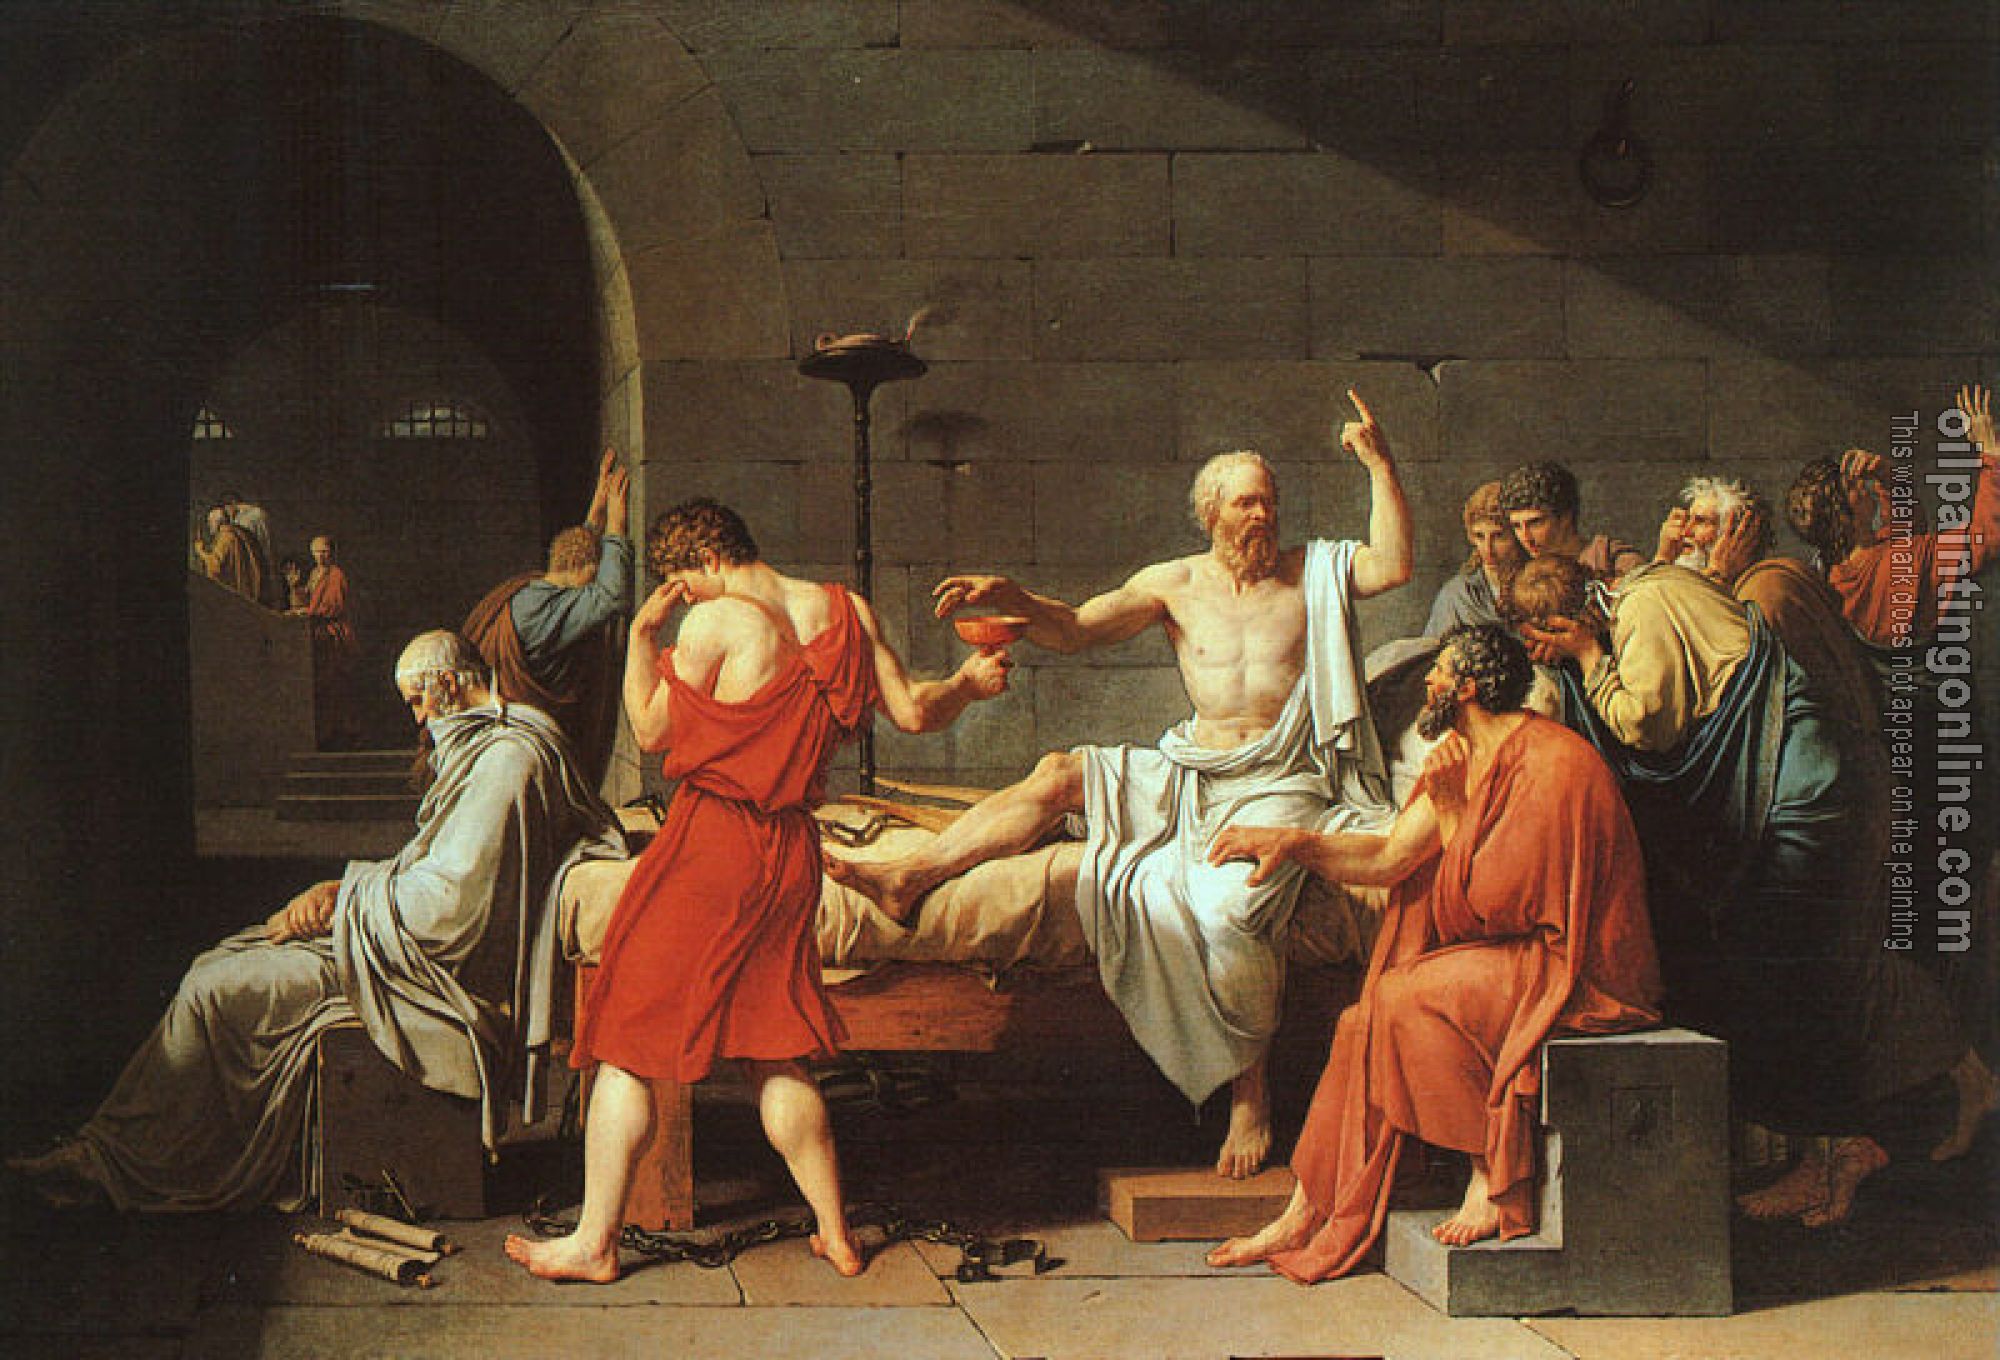 David, Jacques-Louis - The Death of Socrates